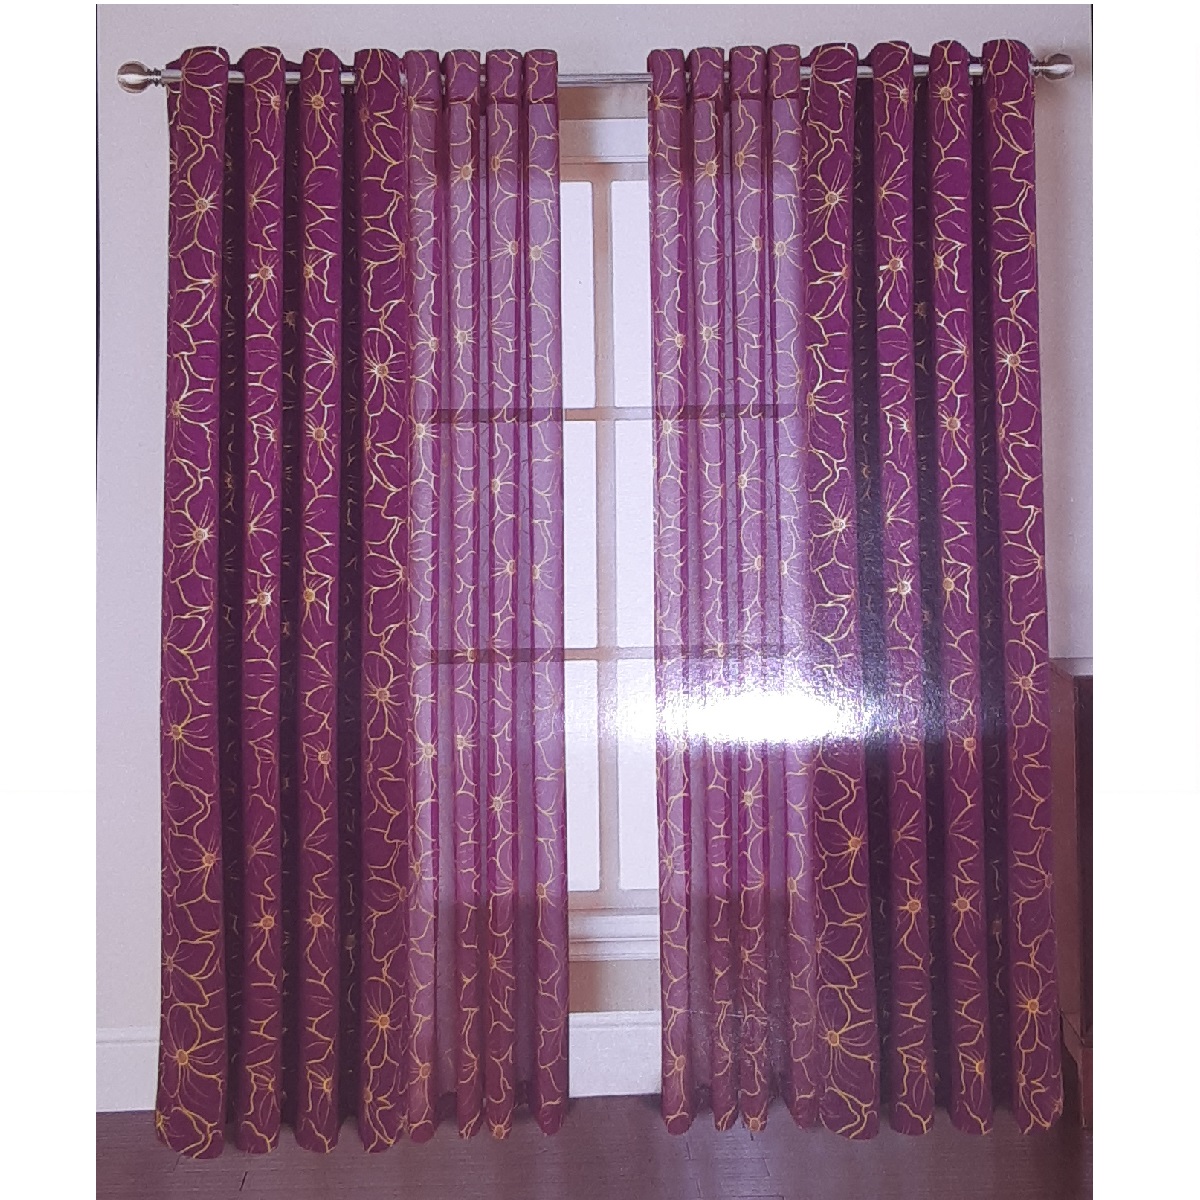 Burgundy Sheer Curtains Set 2 piece curtain set - Burgundy with Gold